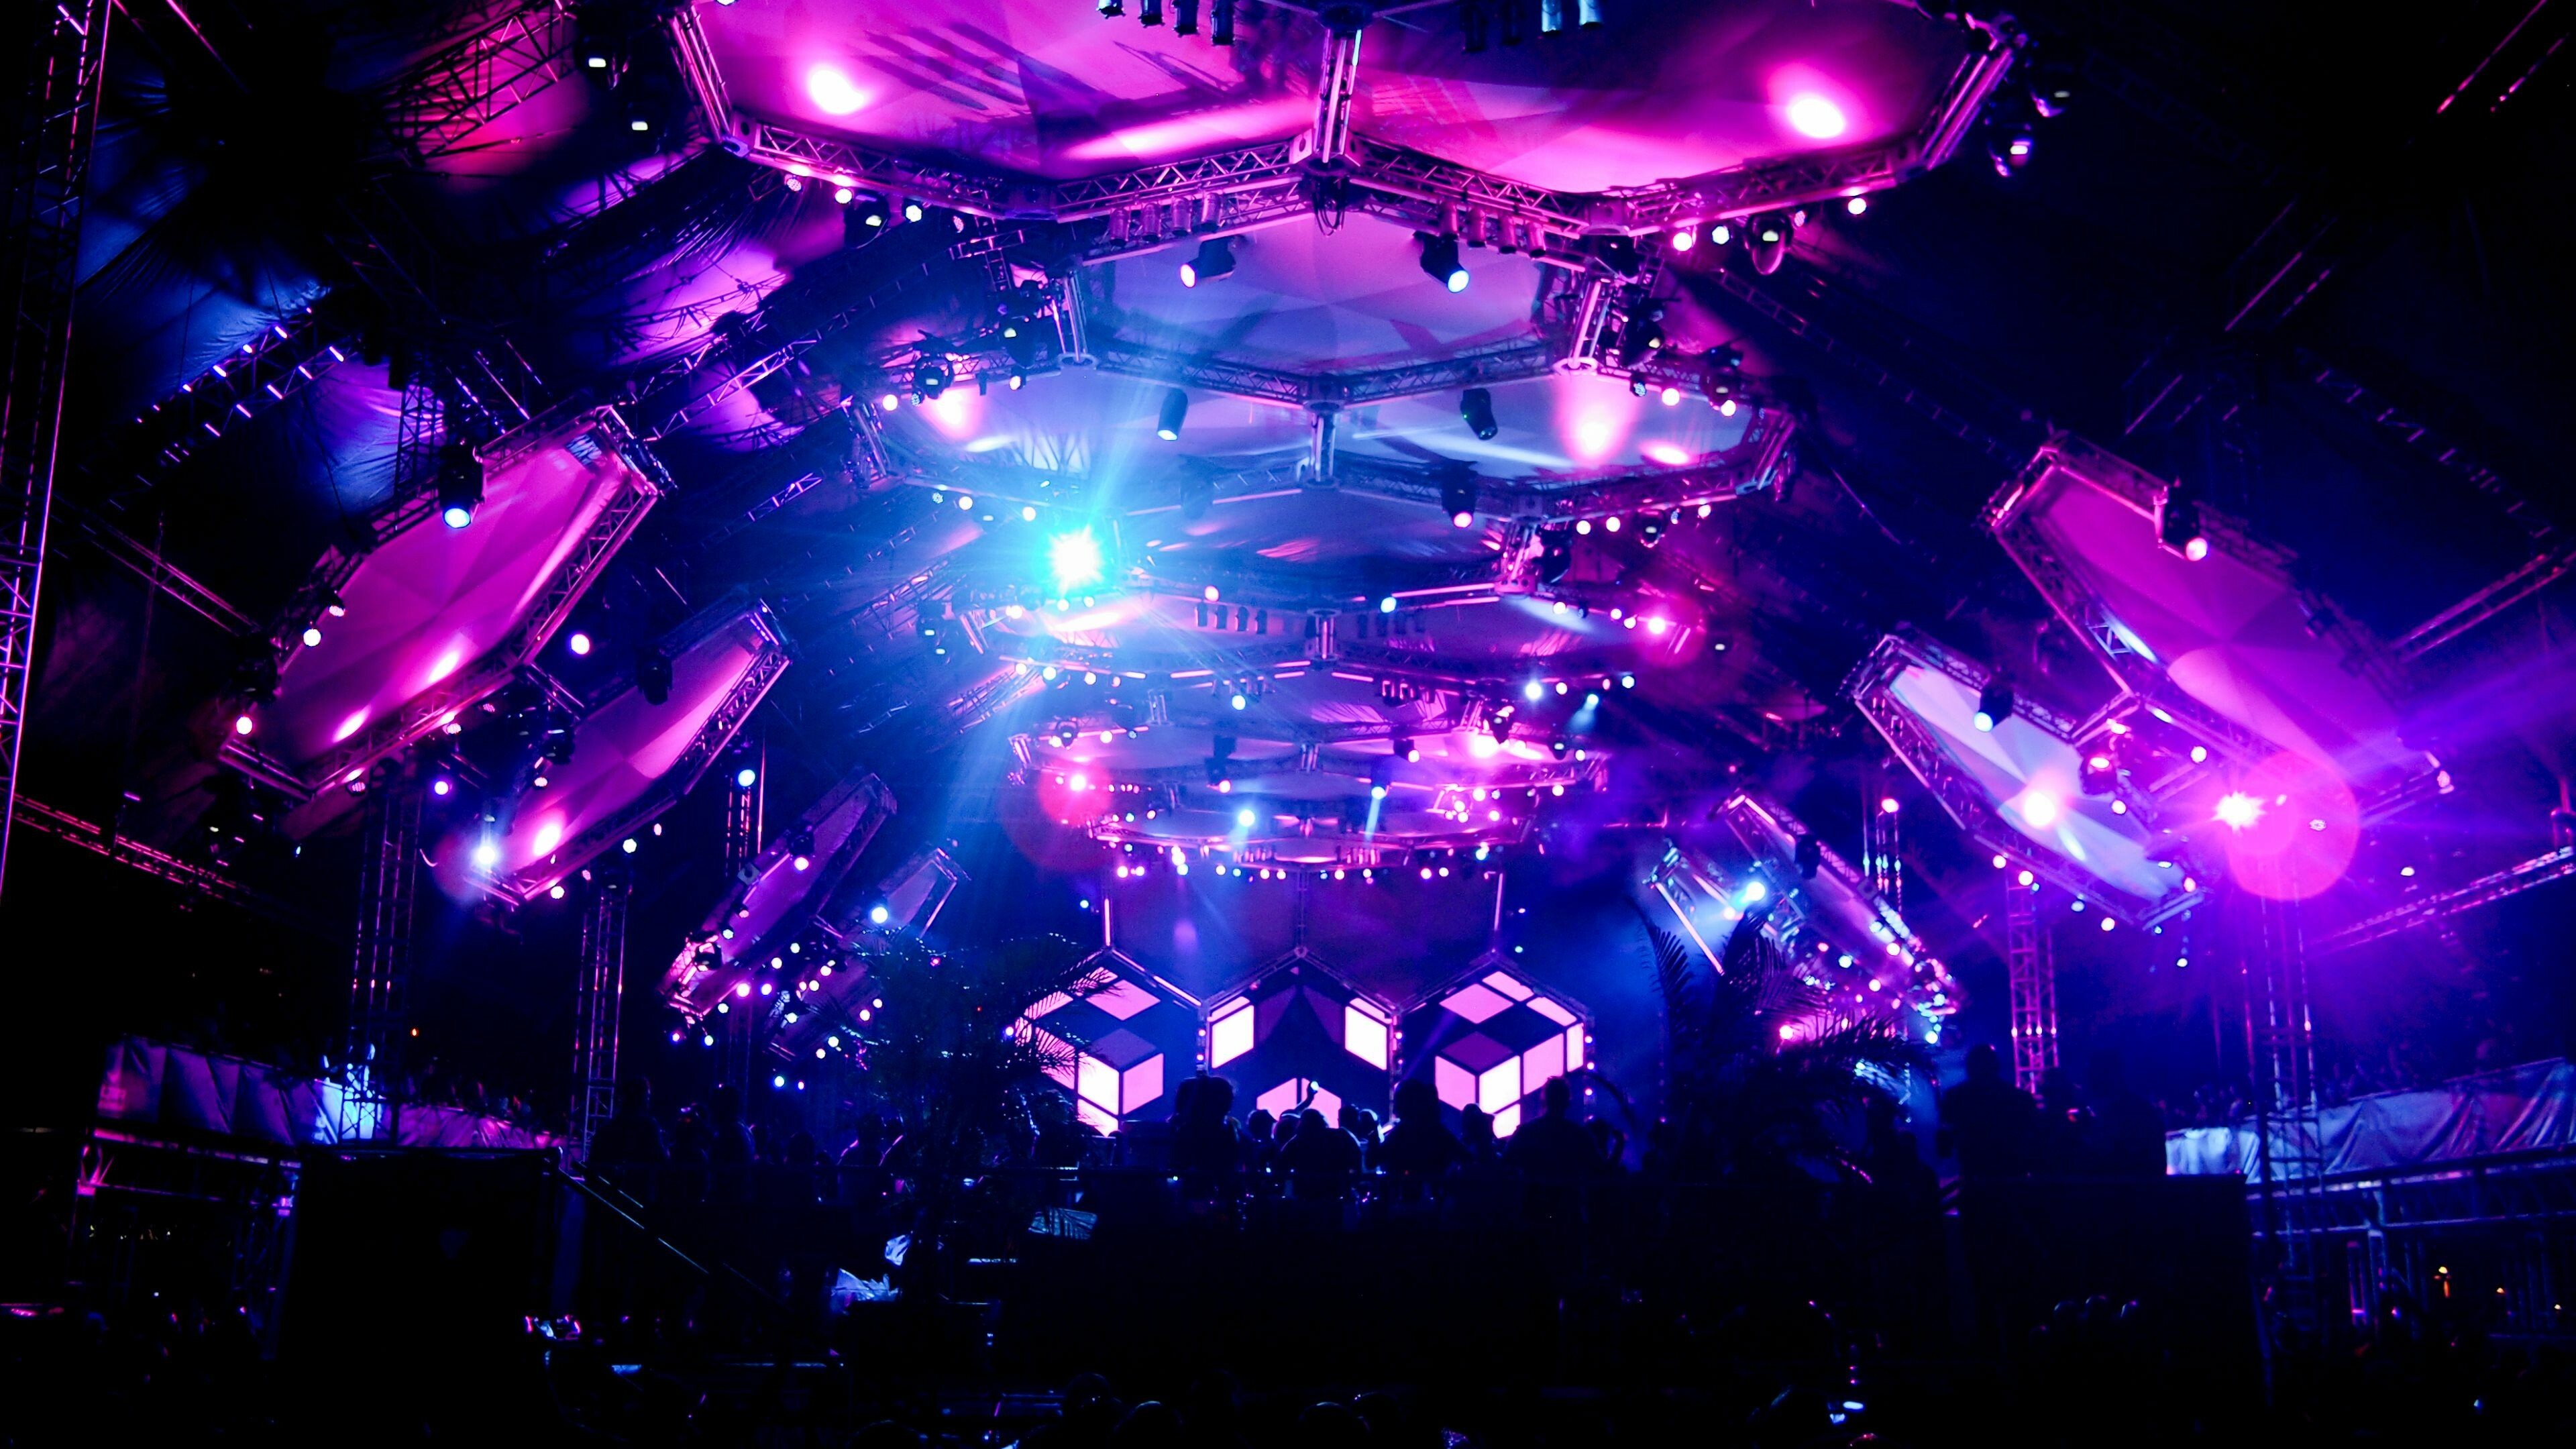 Festival: Dance music event, Armin van Buuren. 3840x2160 4K Wallpaper.